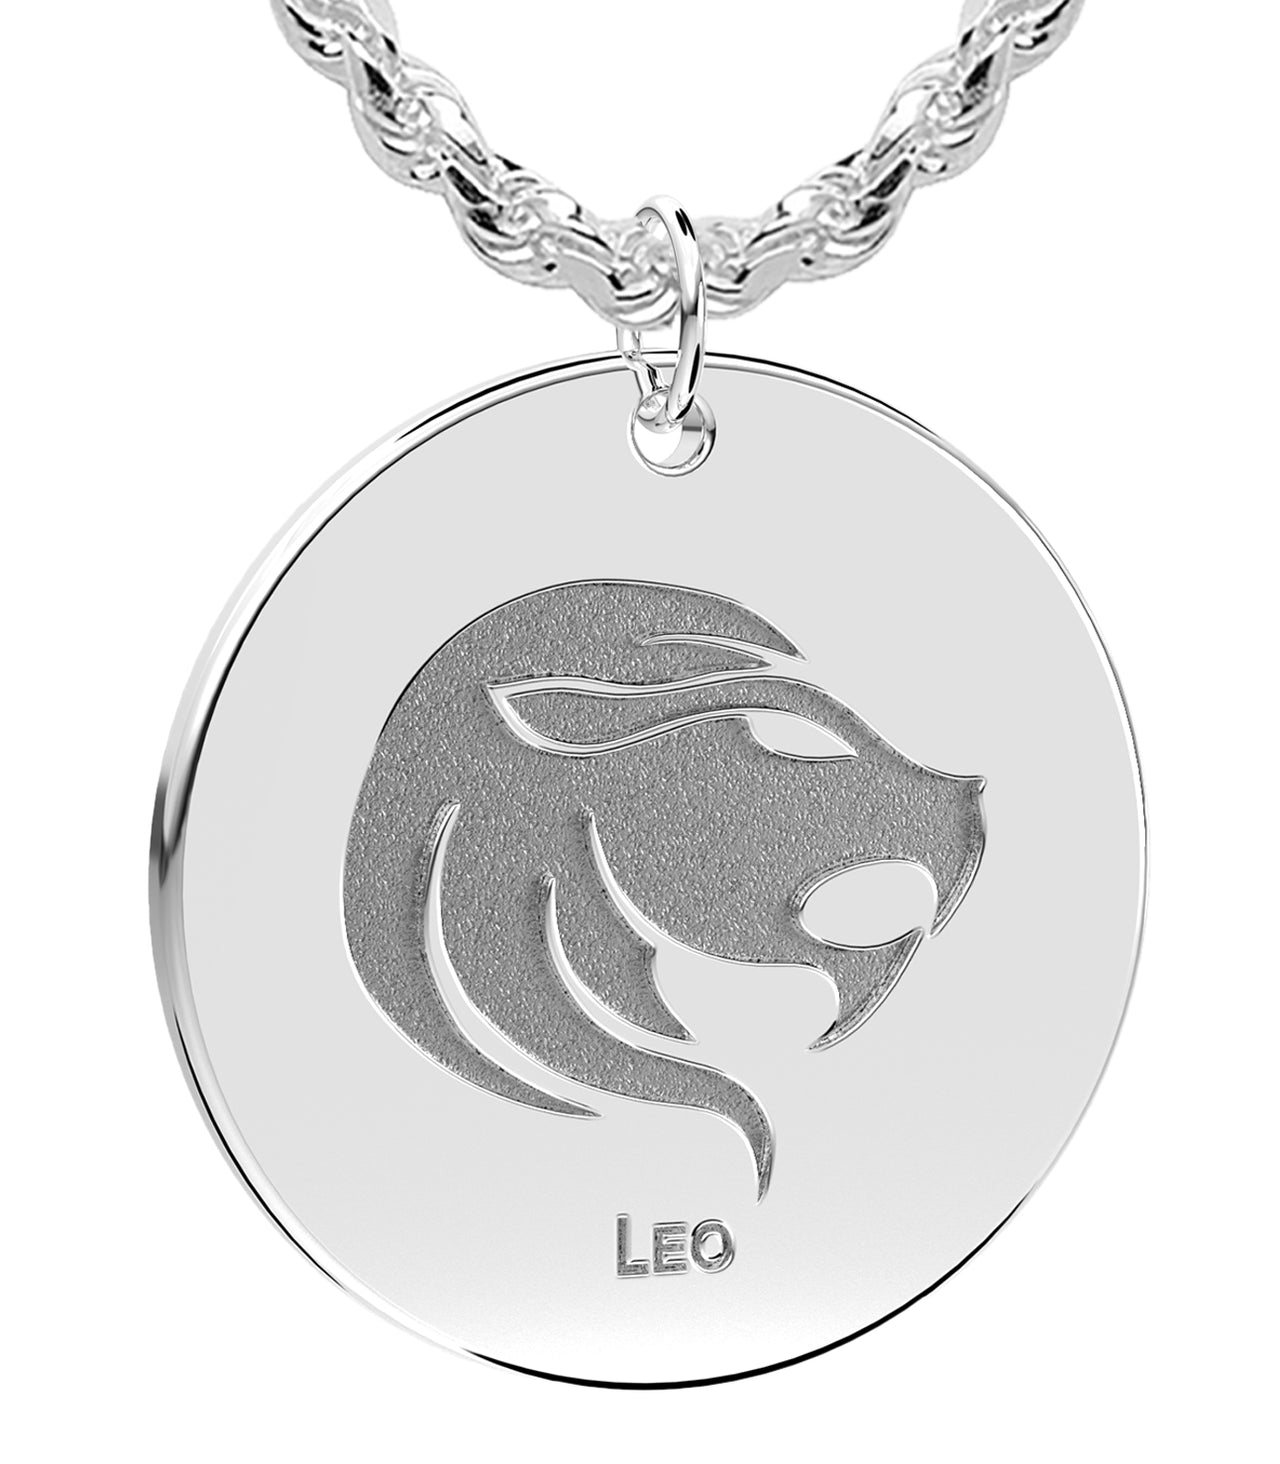 Silver Zodiac Locket Necklace